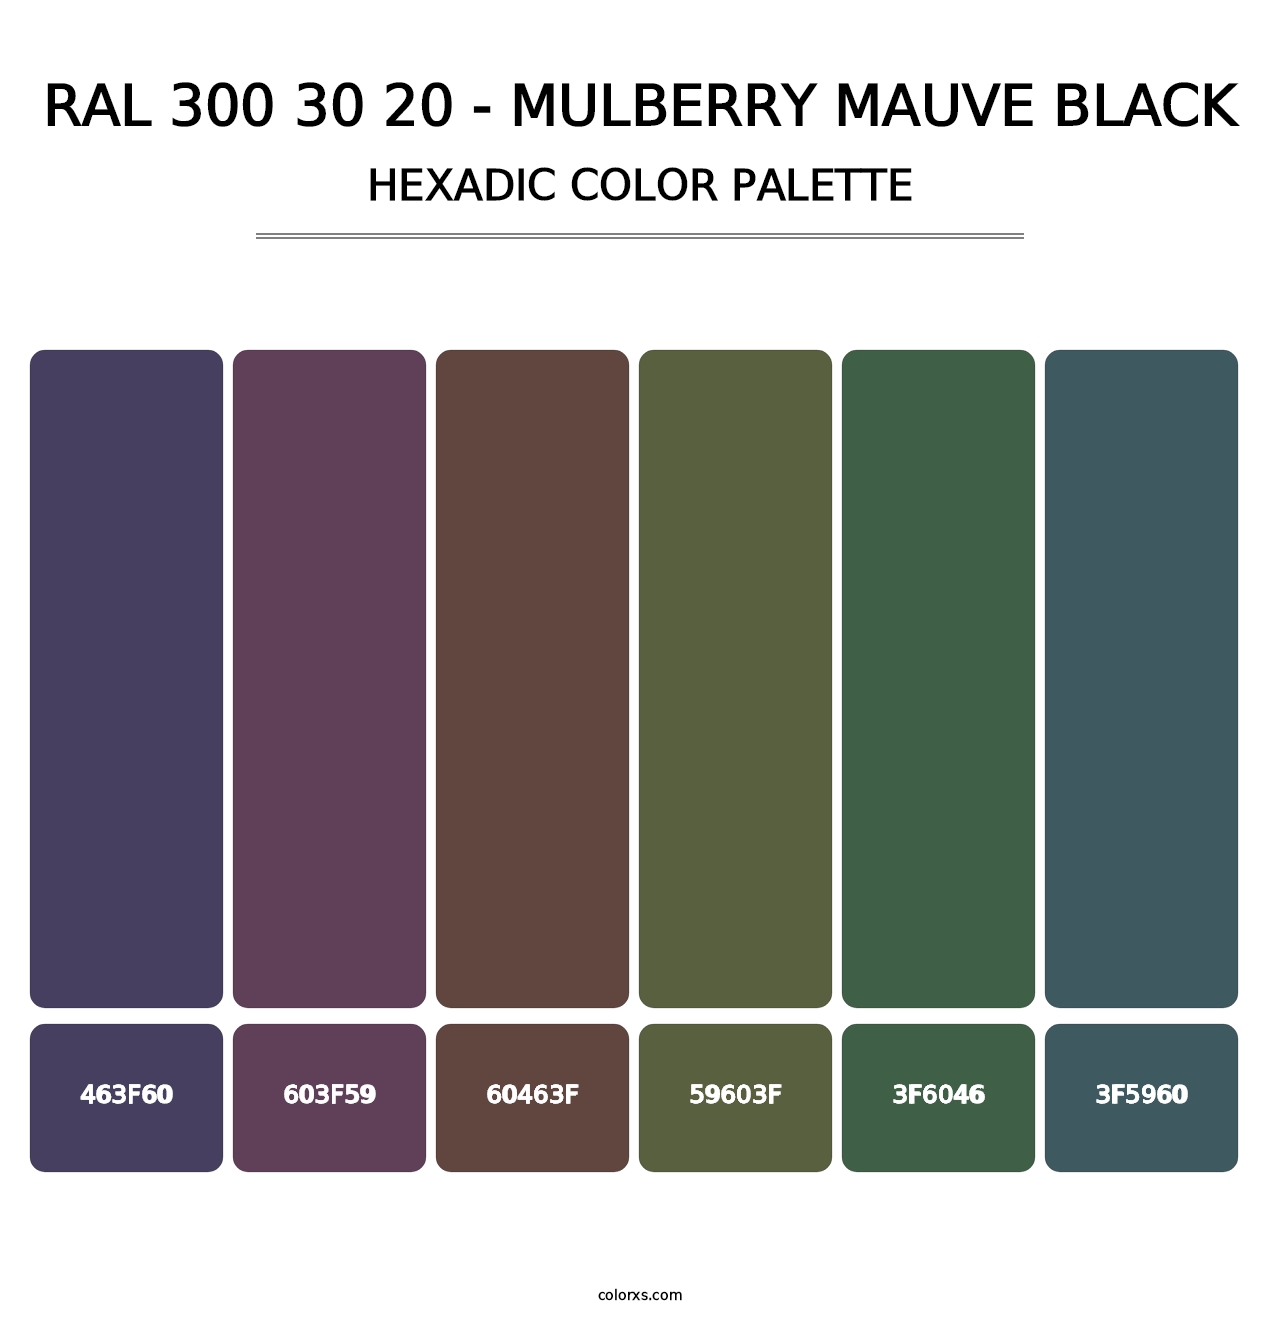 RAL 300 30 20 - Mulberry Mauve Black - Hexadic Color Palette